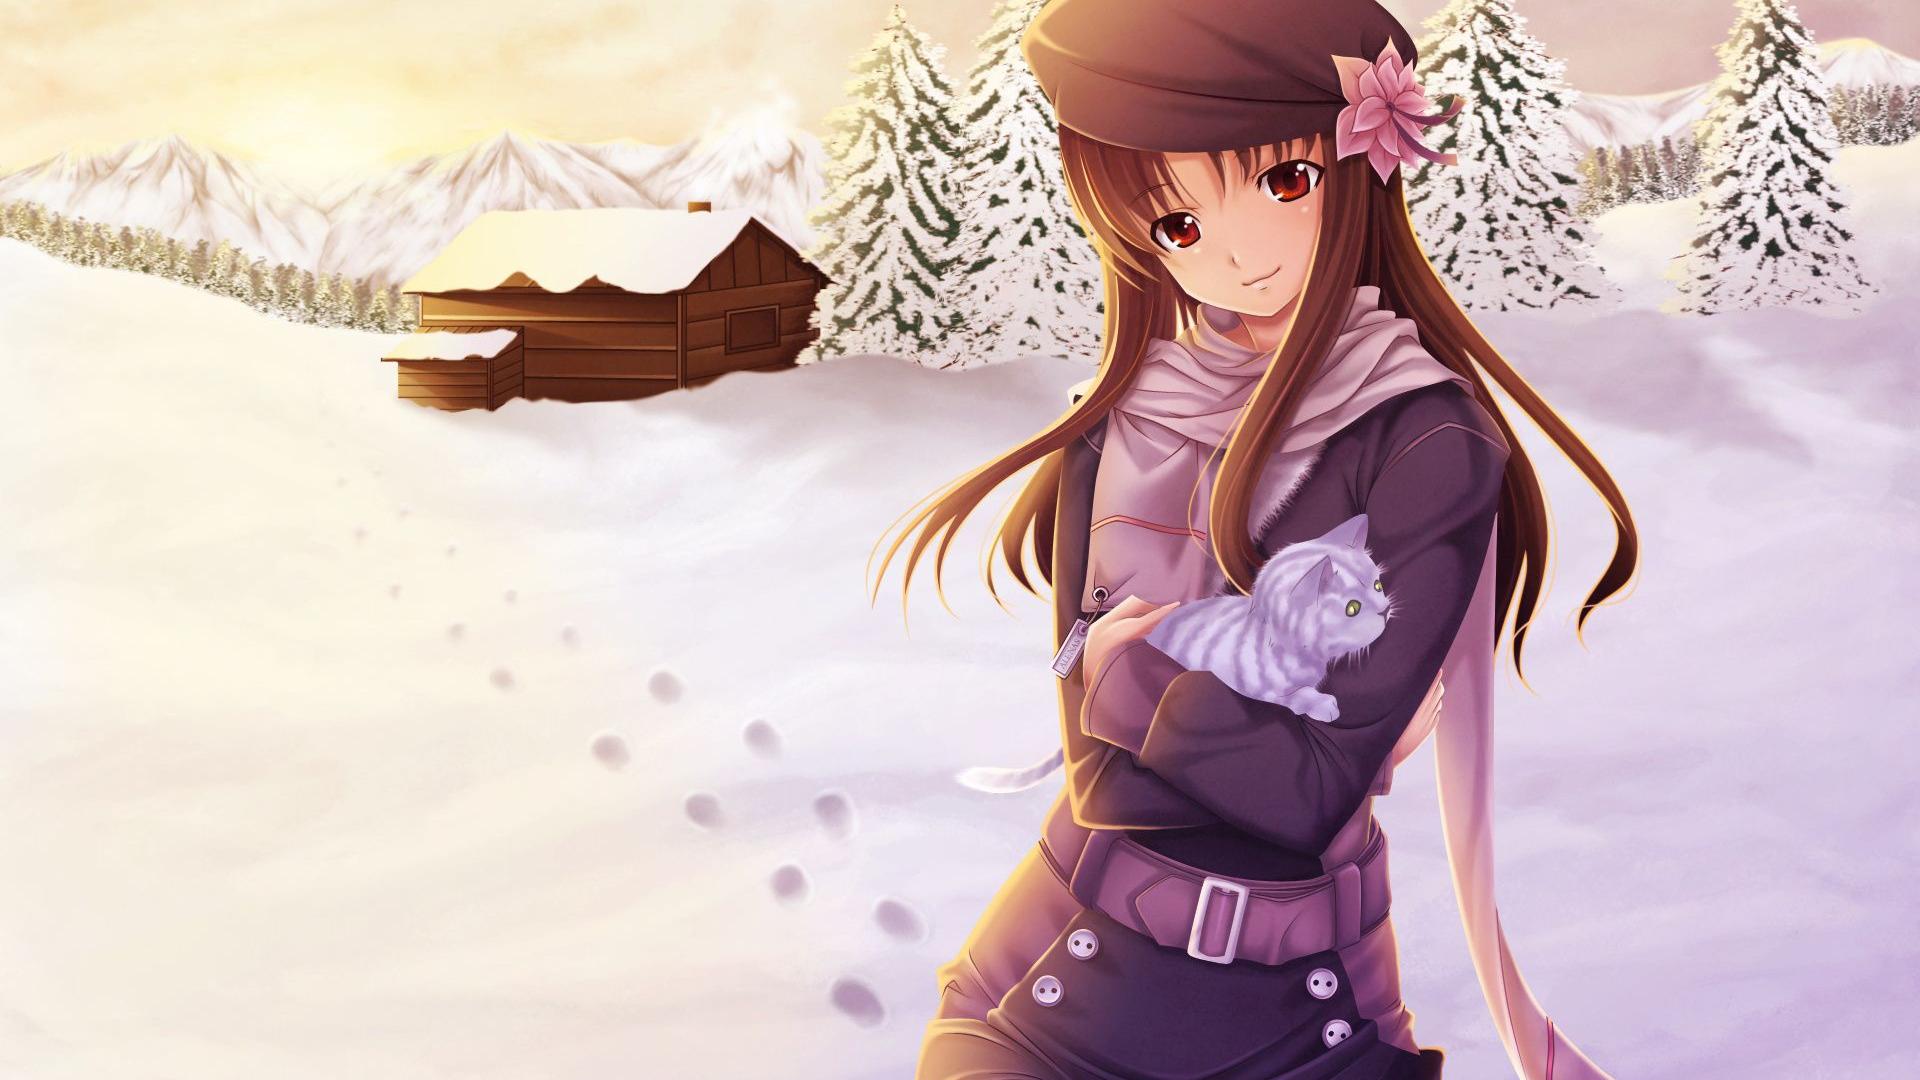 Free download Anime Girl Winter Snow HD Wallpaper of Anime hdwallpaper2013com [1920x1080] for your Desktop, Mobile & Tablet. Explore Anime Girls Wallpaper. Manga Wallpaper, Cool Anime Wallpaper, Anime Wallpaper HD